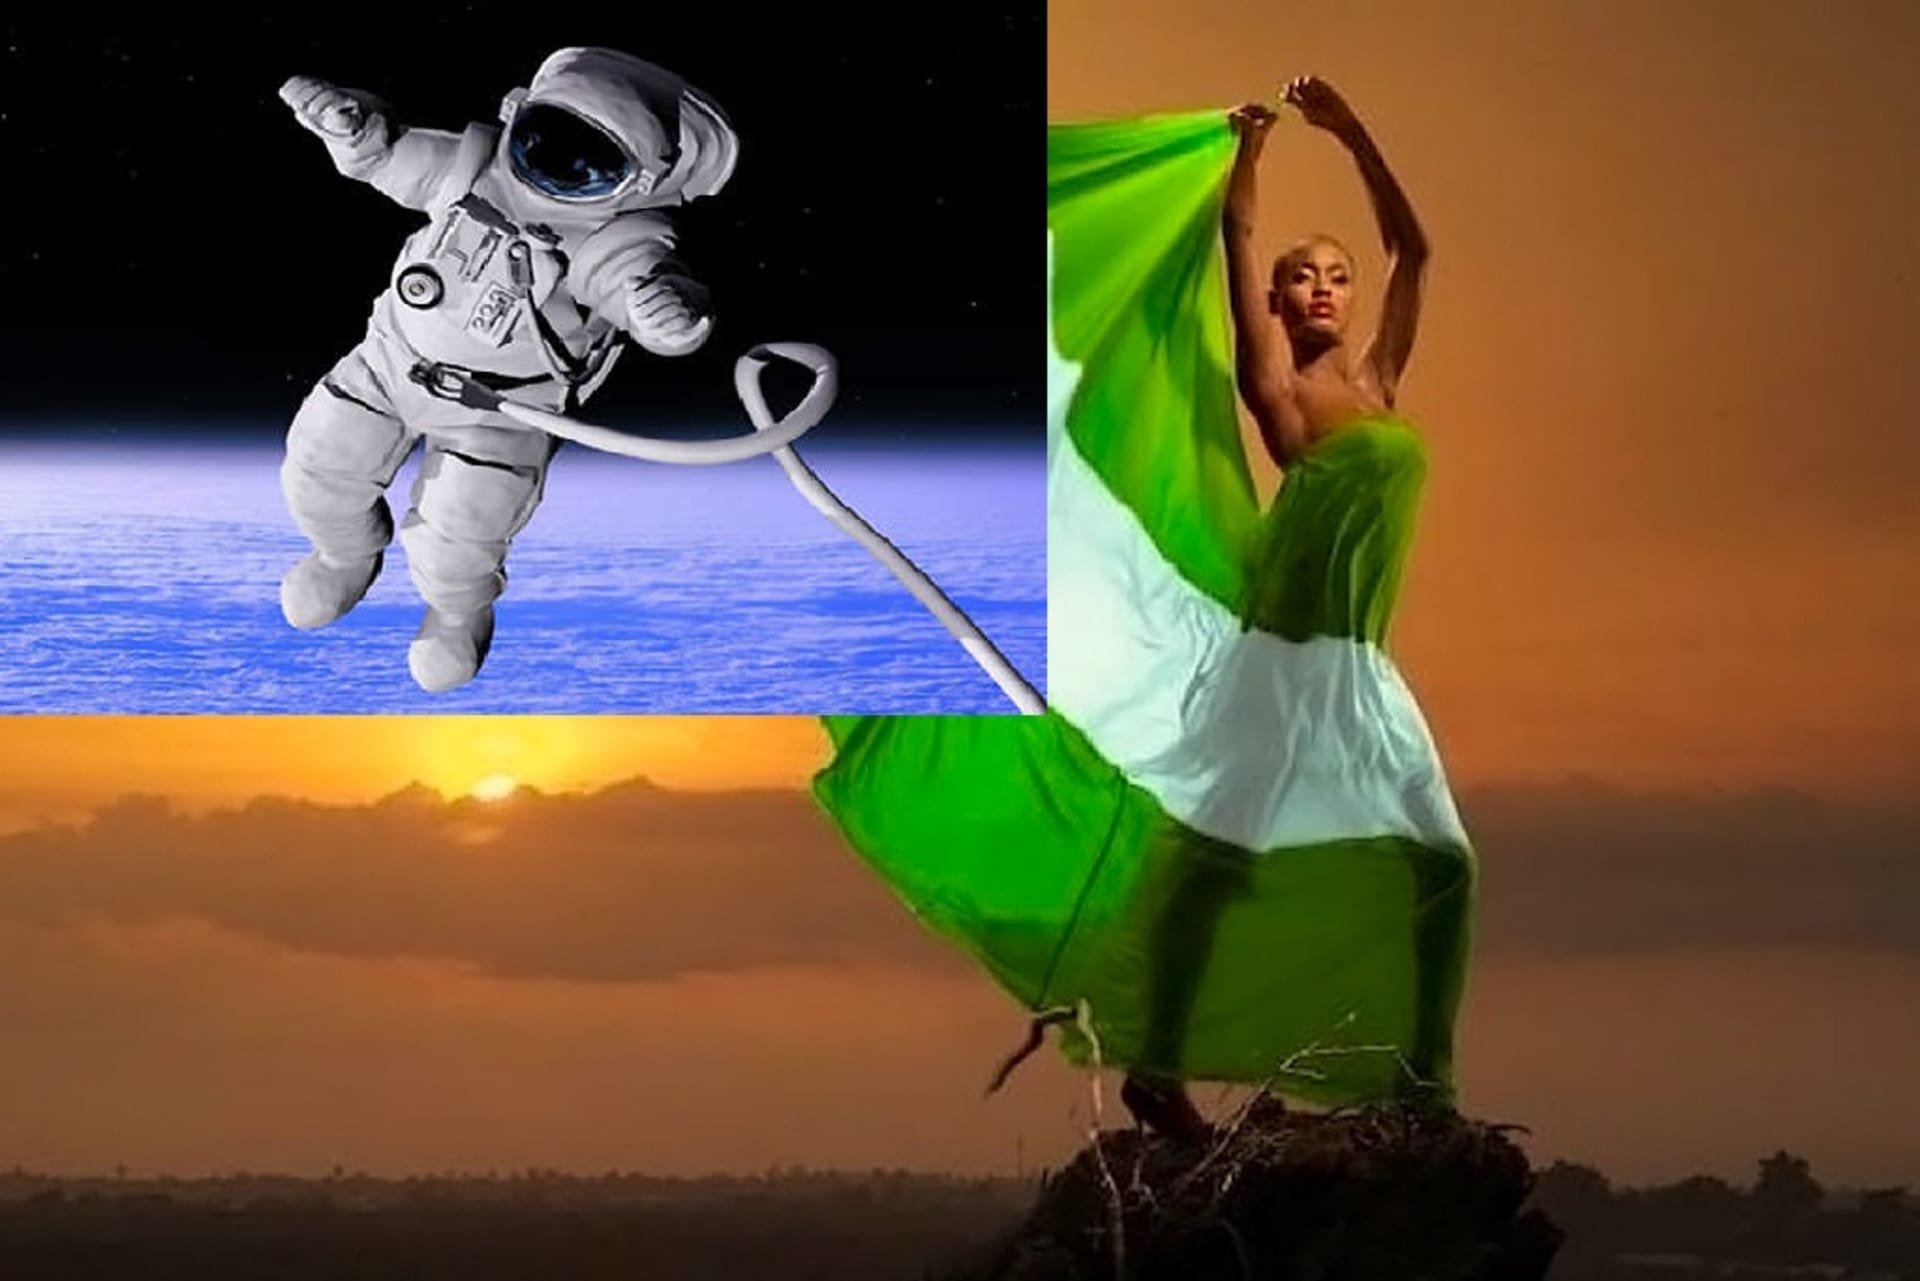 Spaste nigerijského astronauta!